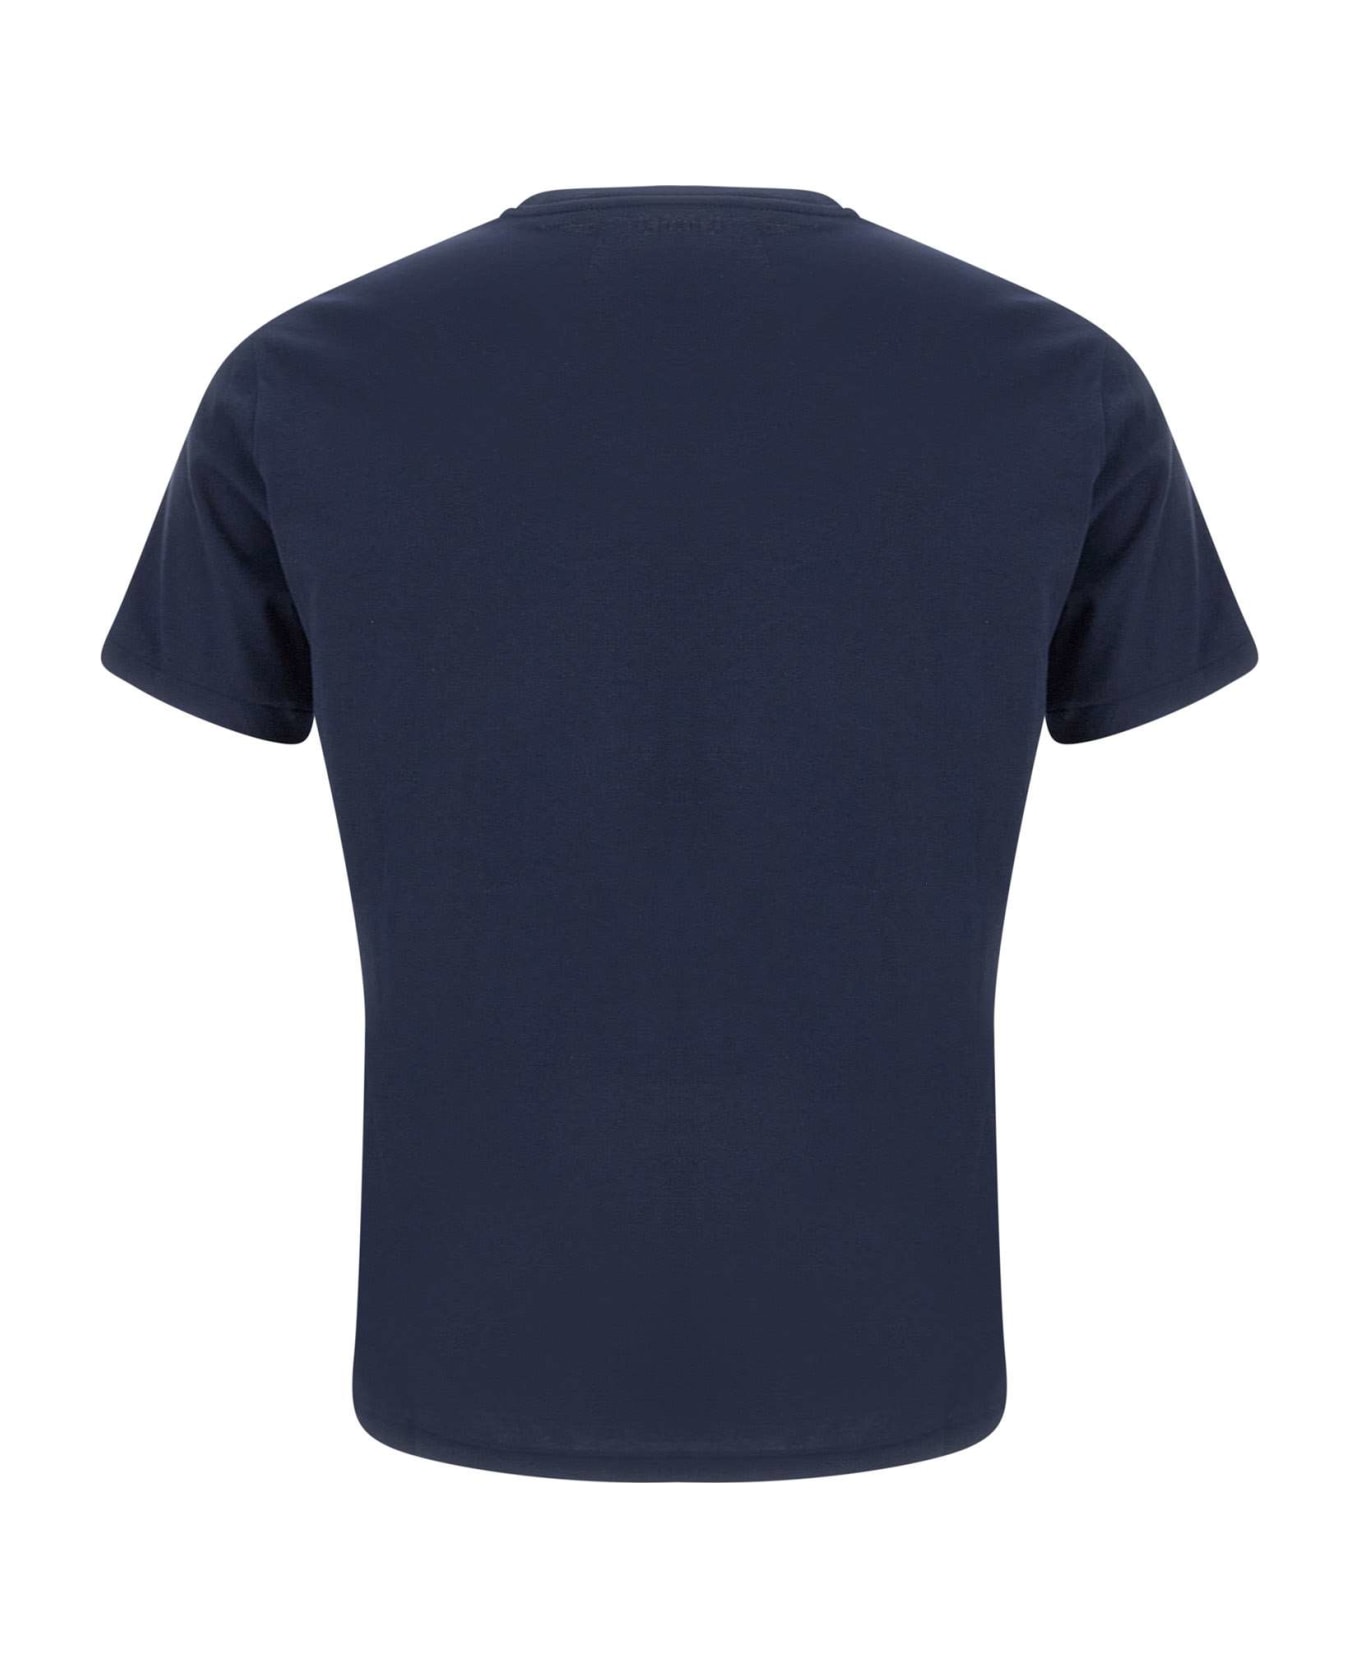 Polo Ralph Lauren Cotton T-shirt - Cruise navy シャツ